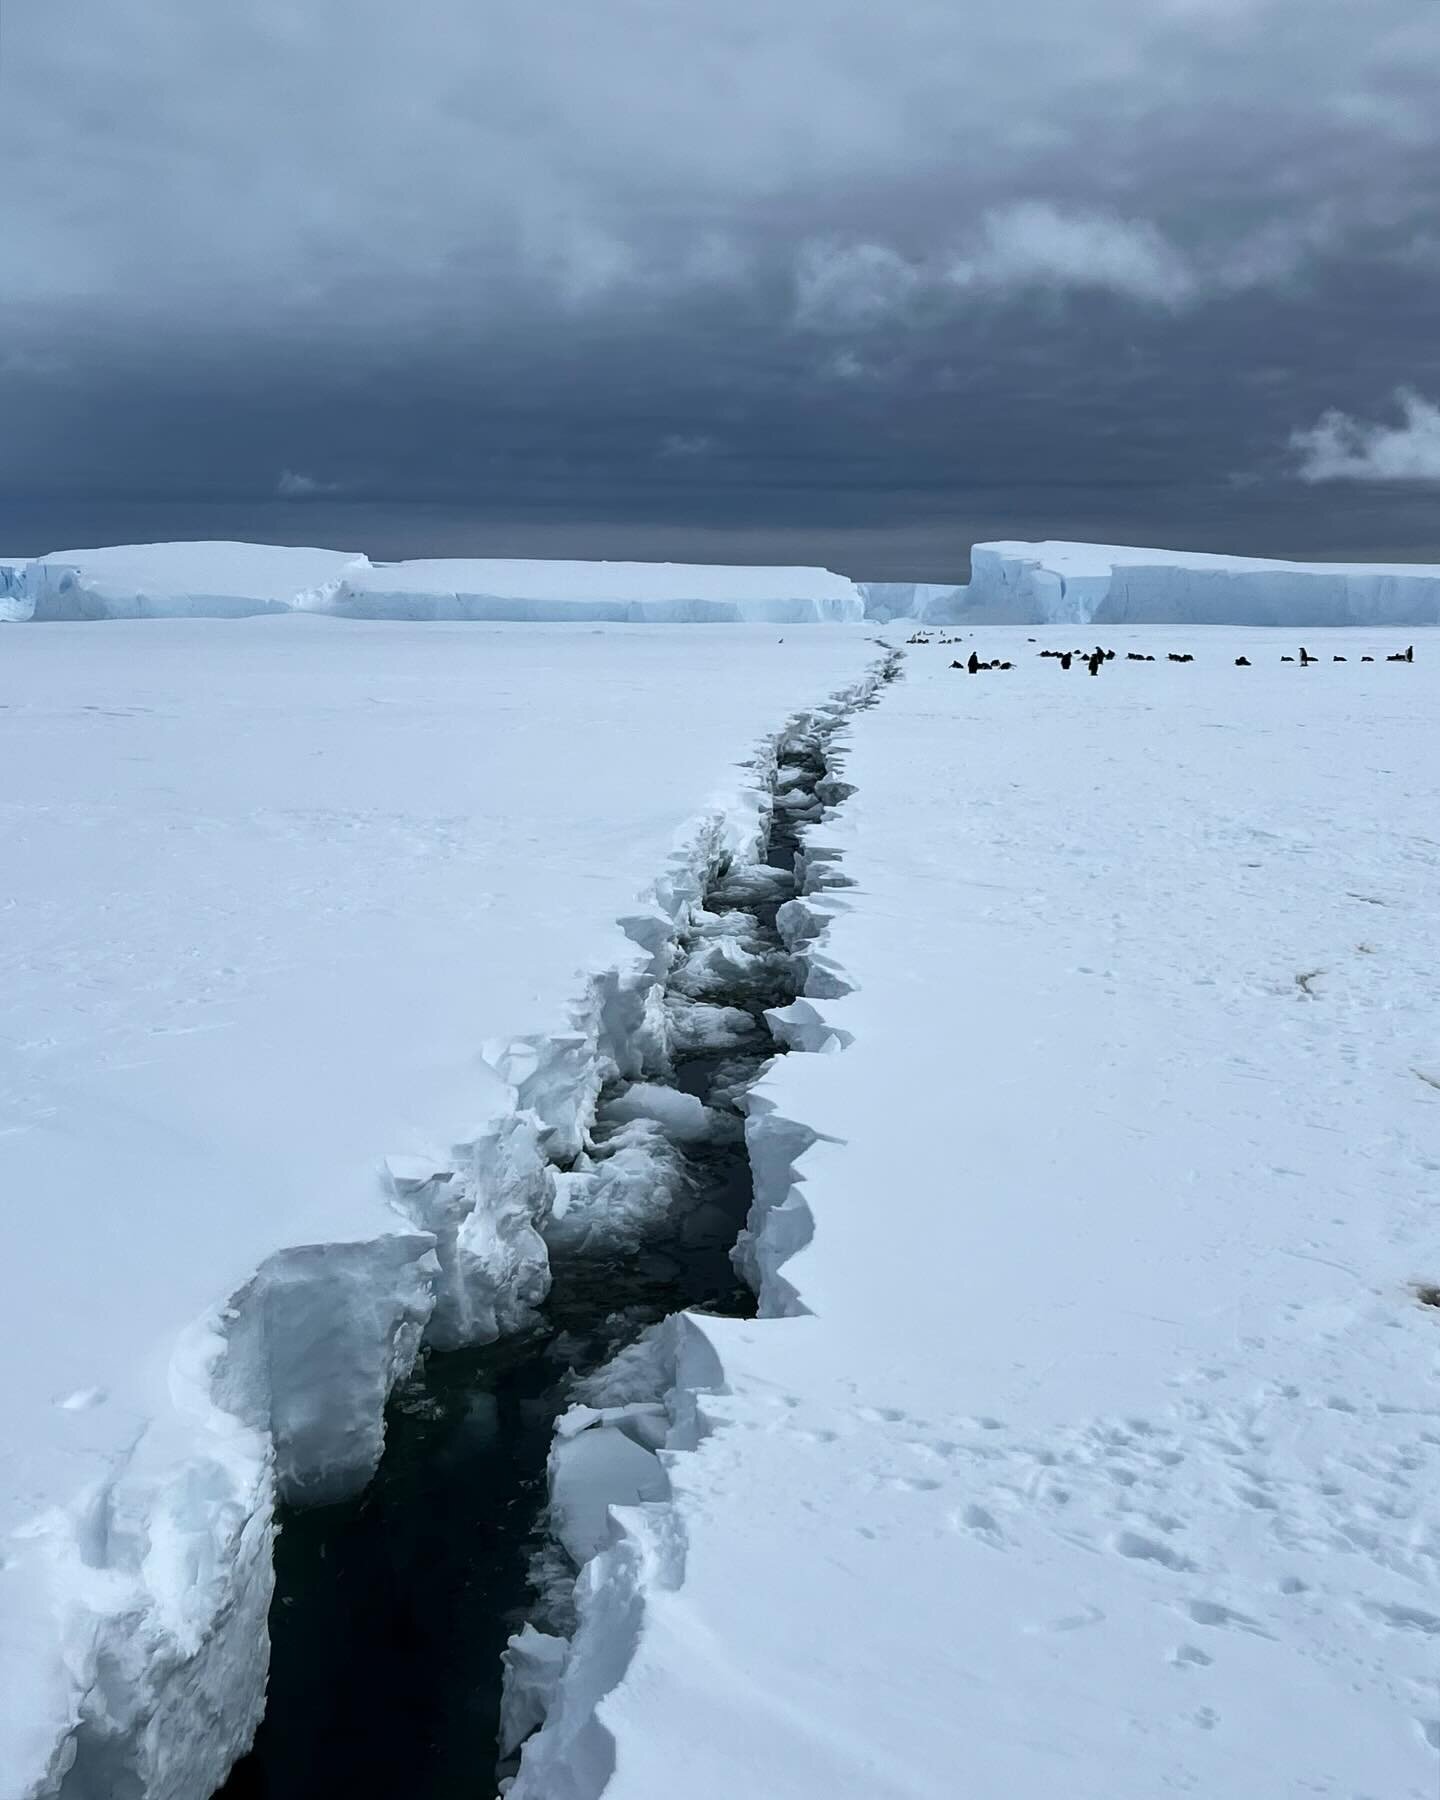 Homeward bound after another &lsquo;cracking&rsquo; season in Antarctica 💙 
.
@polar_safety_and_logistics #antarctica #filmandtvsafety #polarexpedition #polarguide #seaice #frozenocean